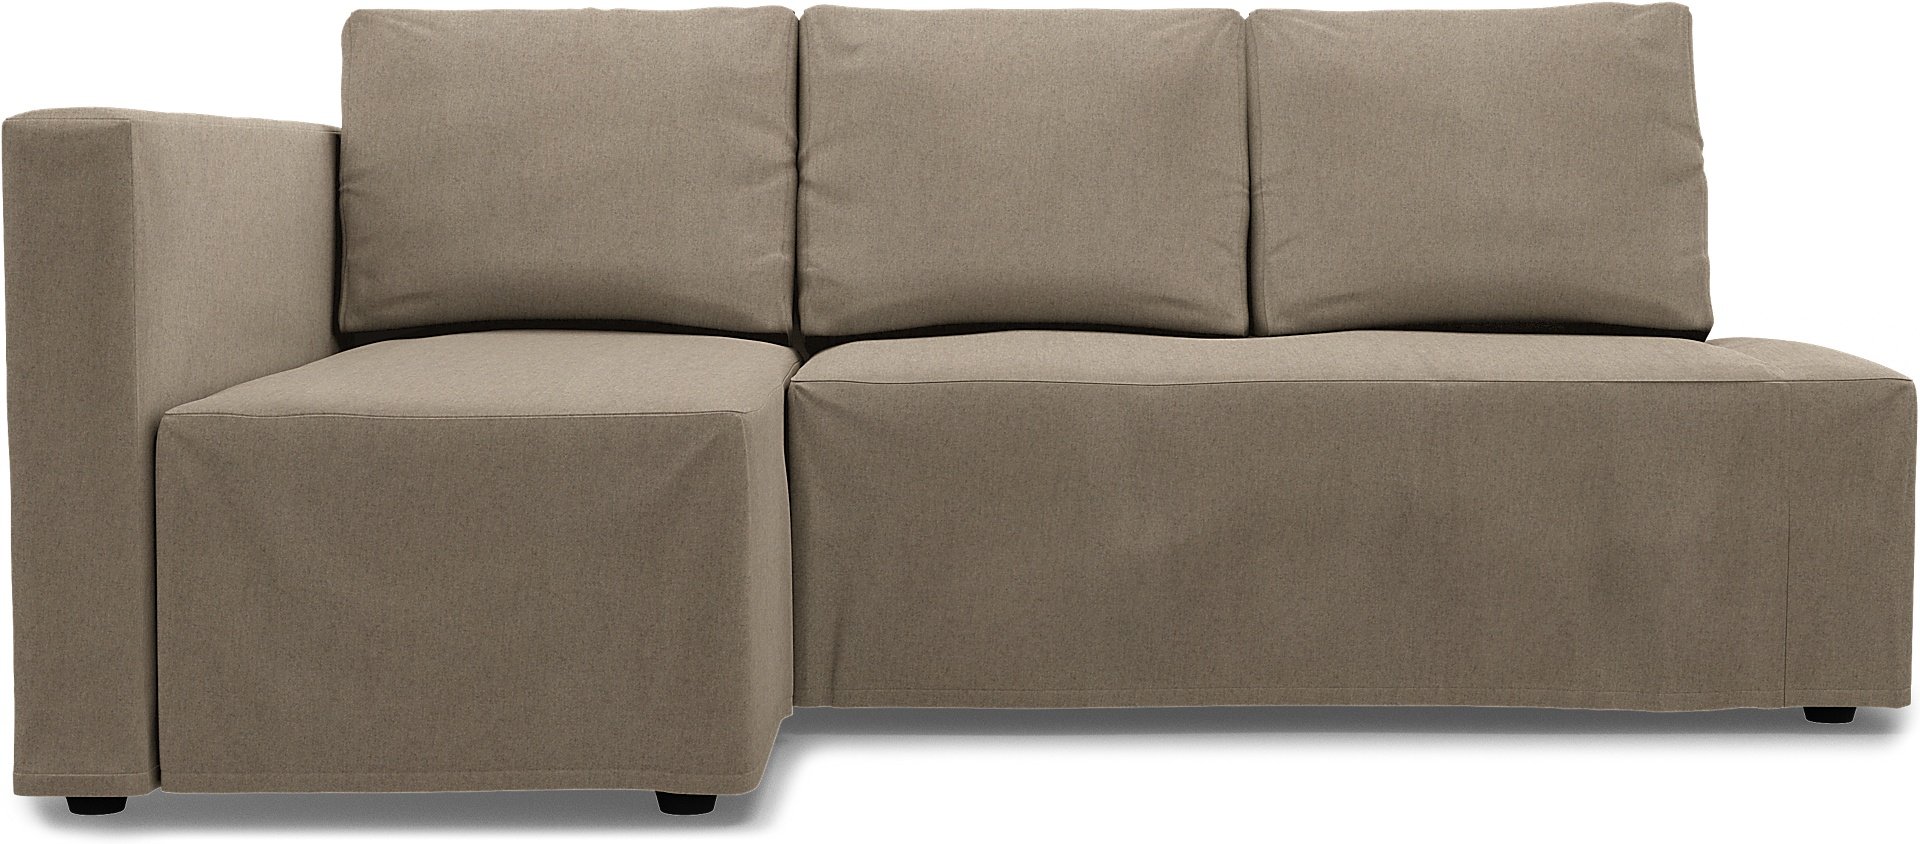 IKEA - Friheten Sofa Bed with Left Chaise Cover, Birch, Wool - Bemz